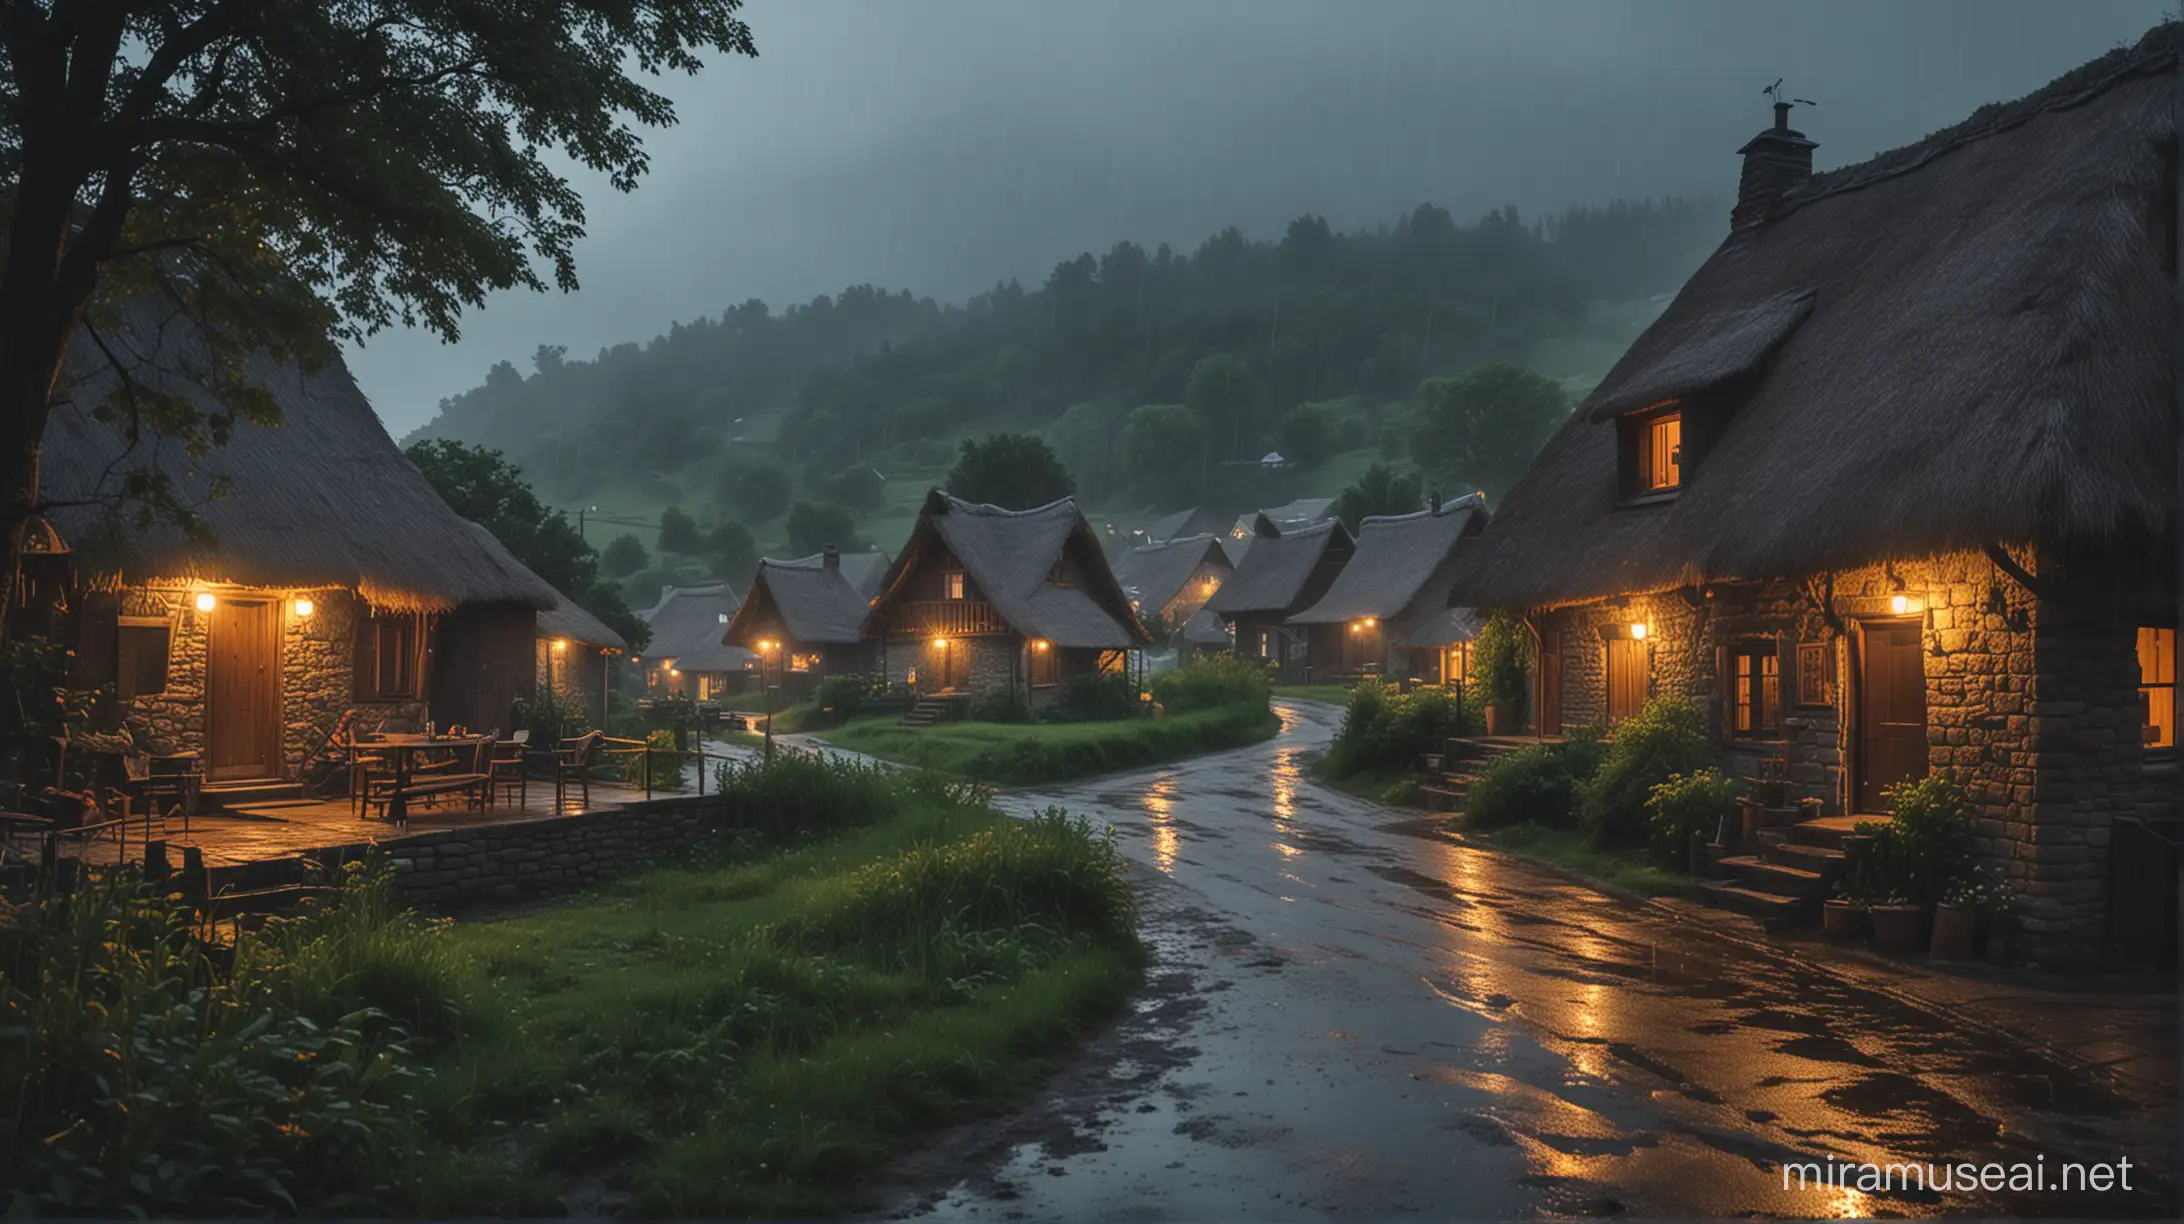 Cozy night village beauty of nature Rainy weather 